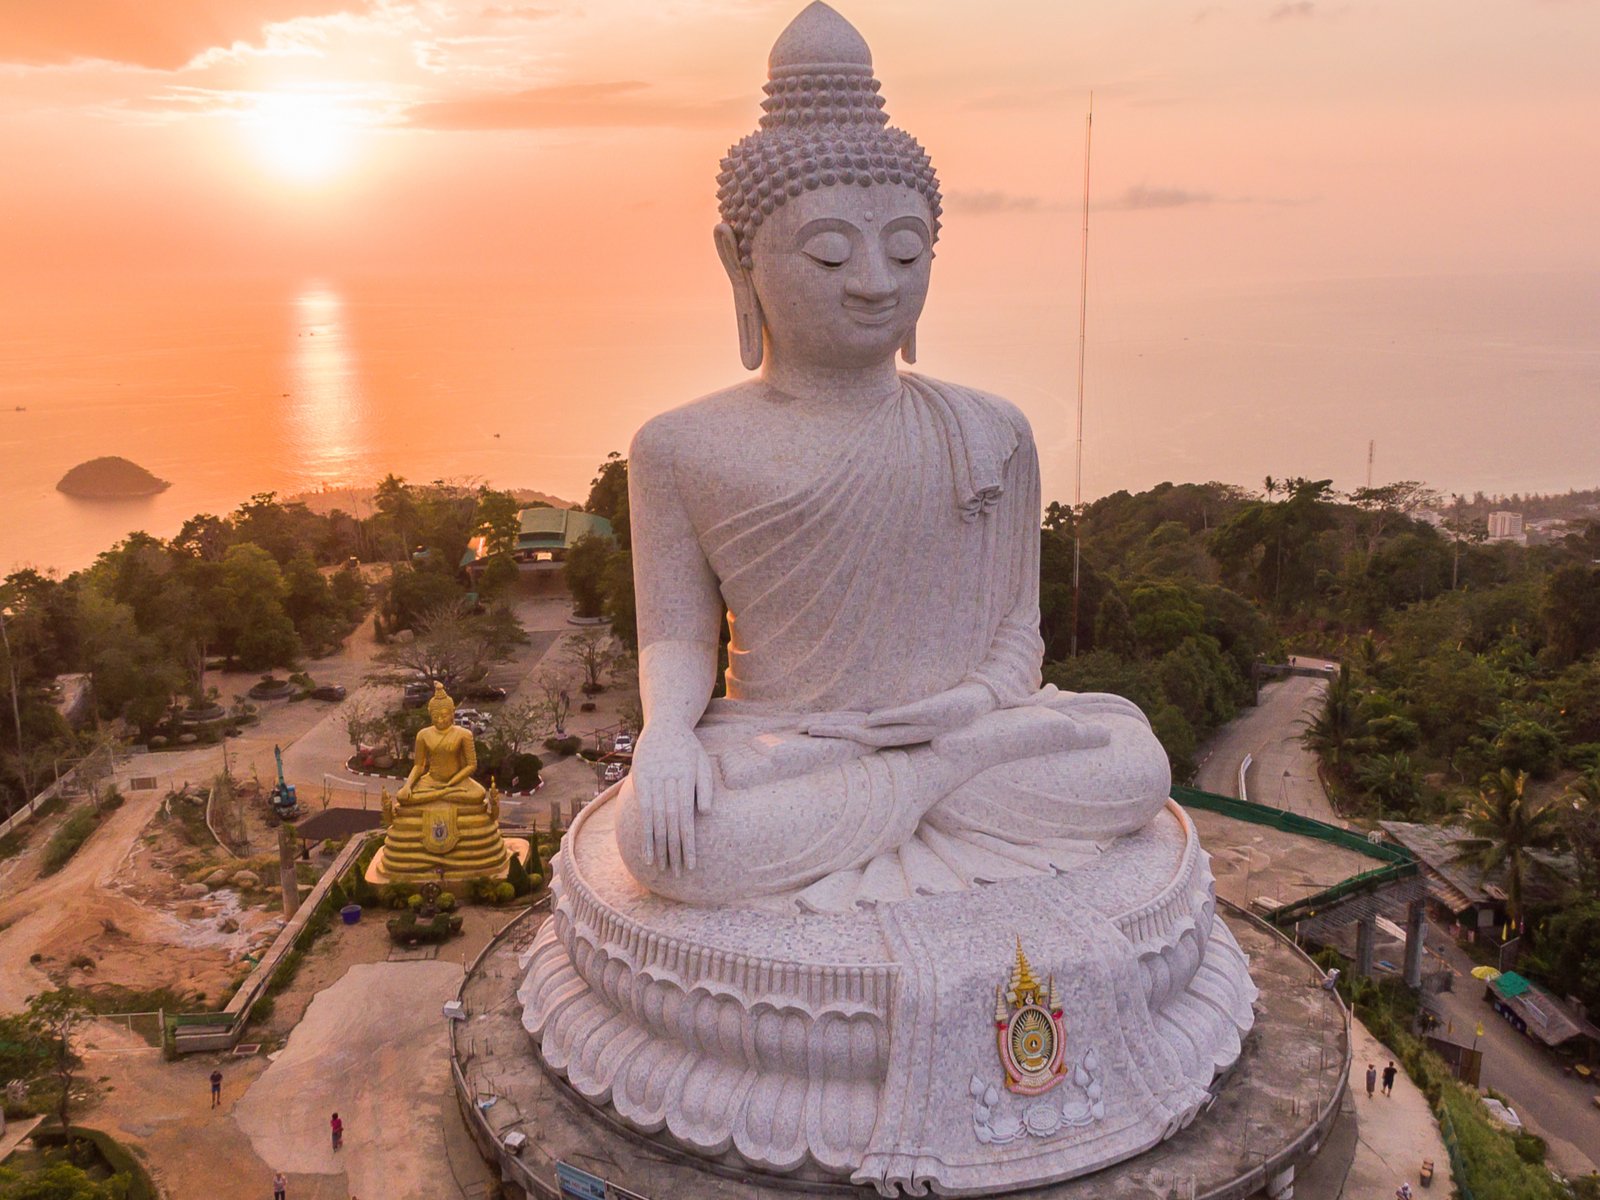 A statue of Buddha in Thailand's tourist mecca Phuket.